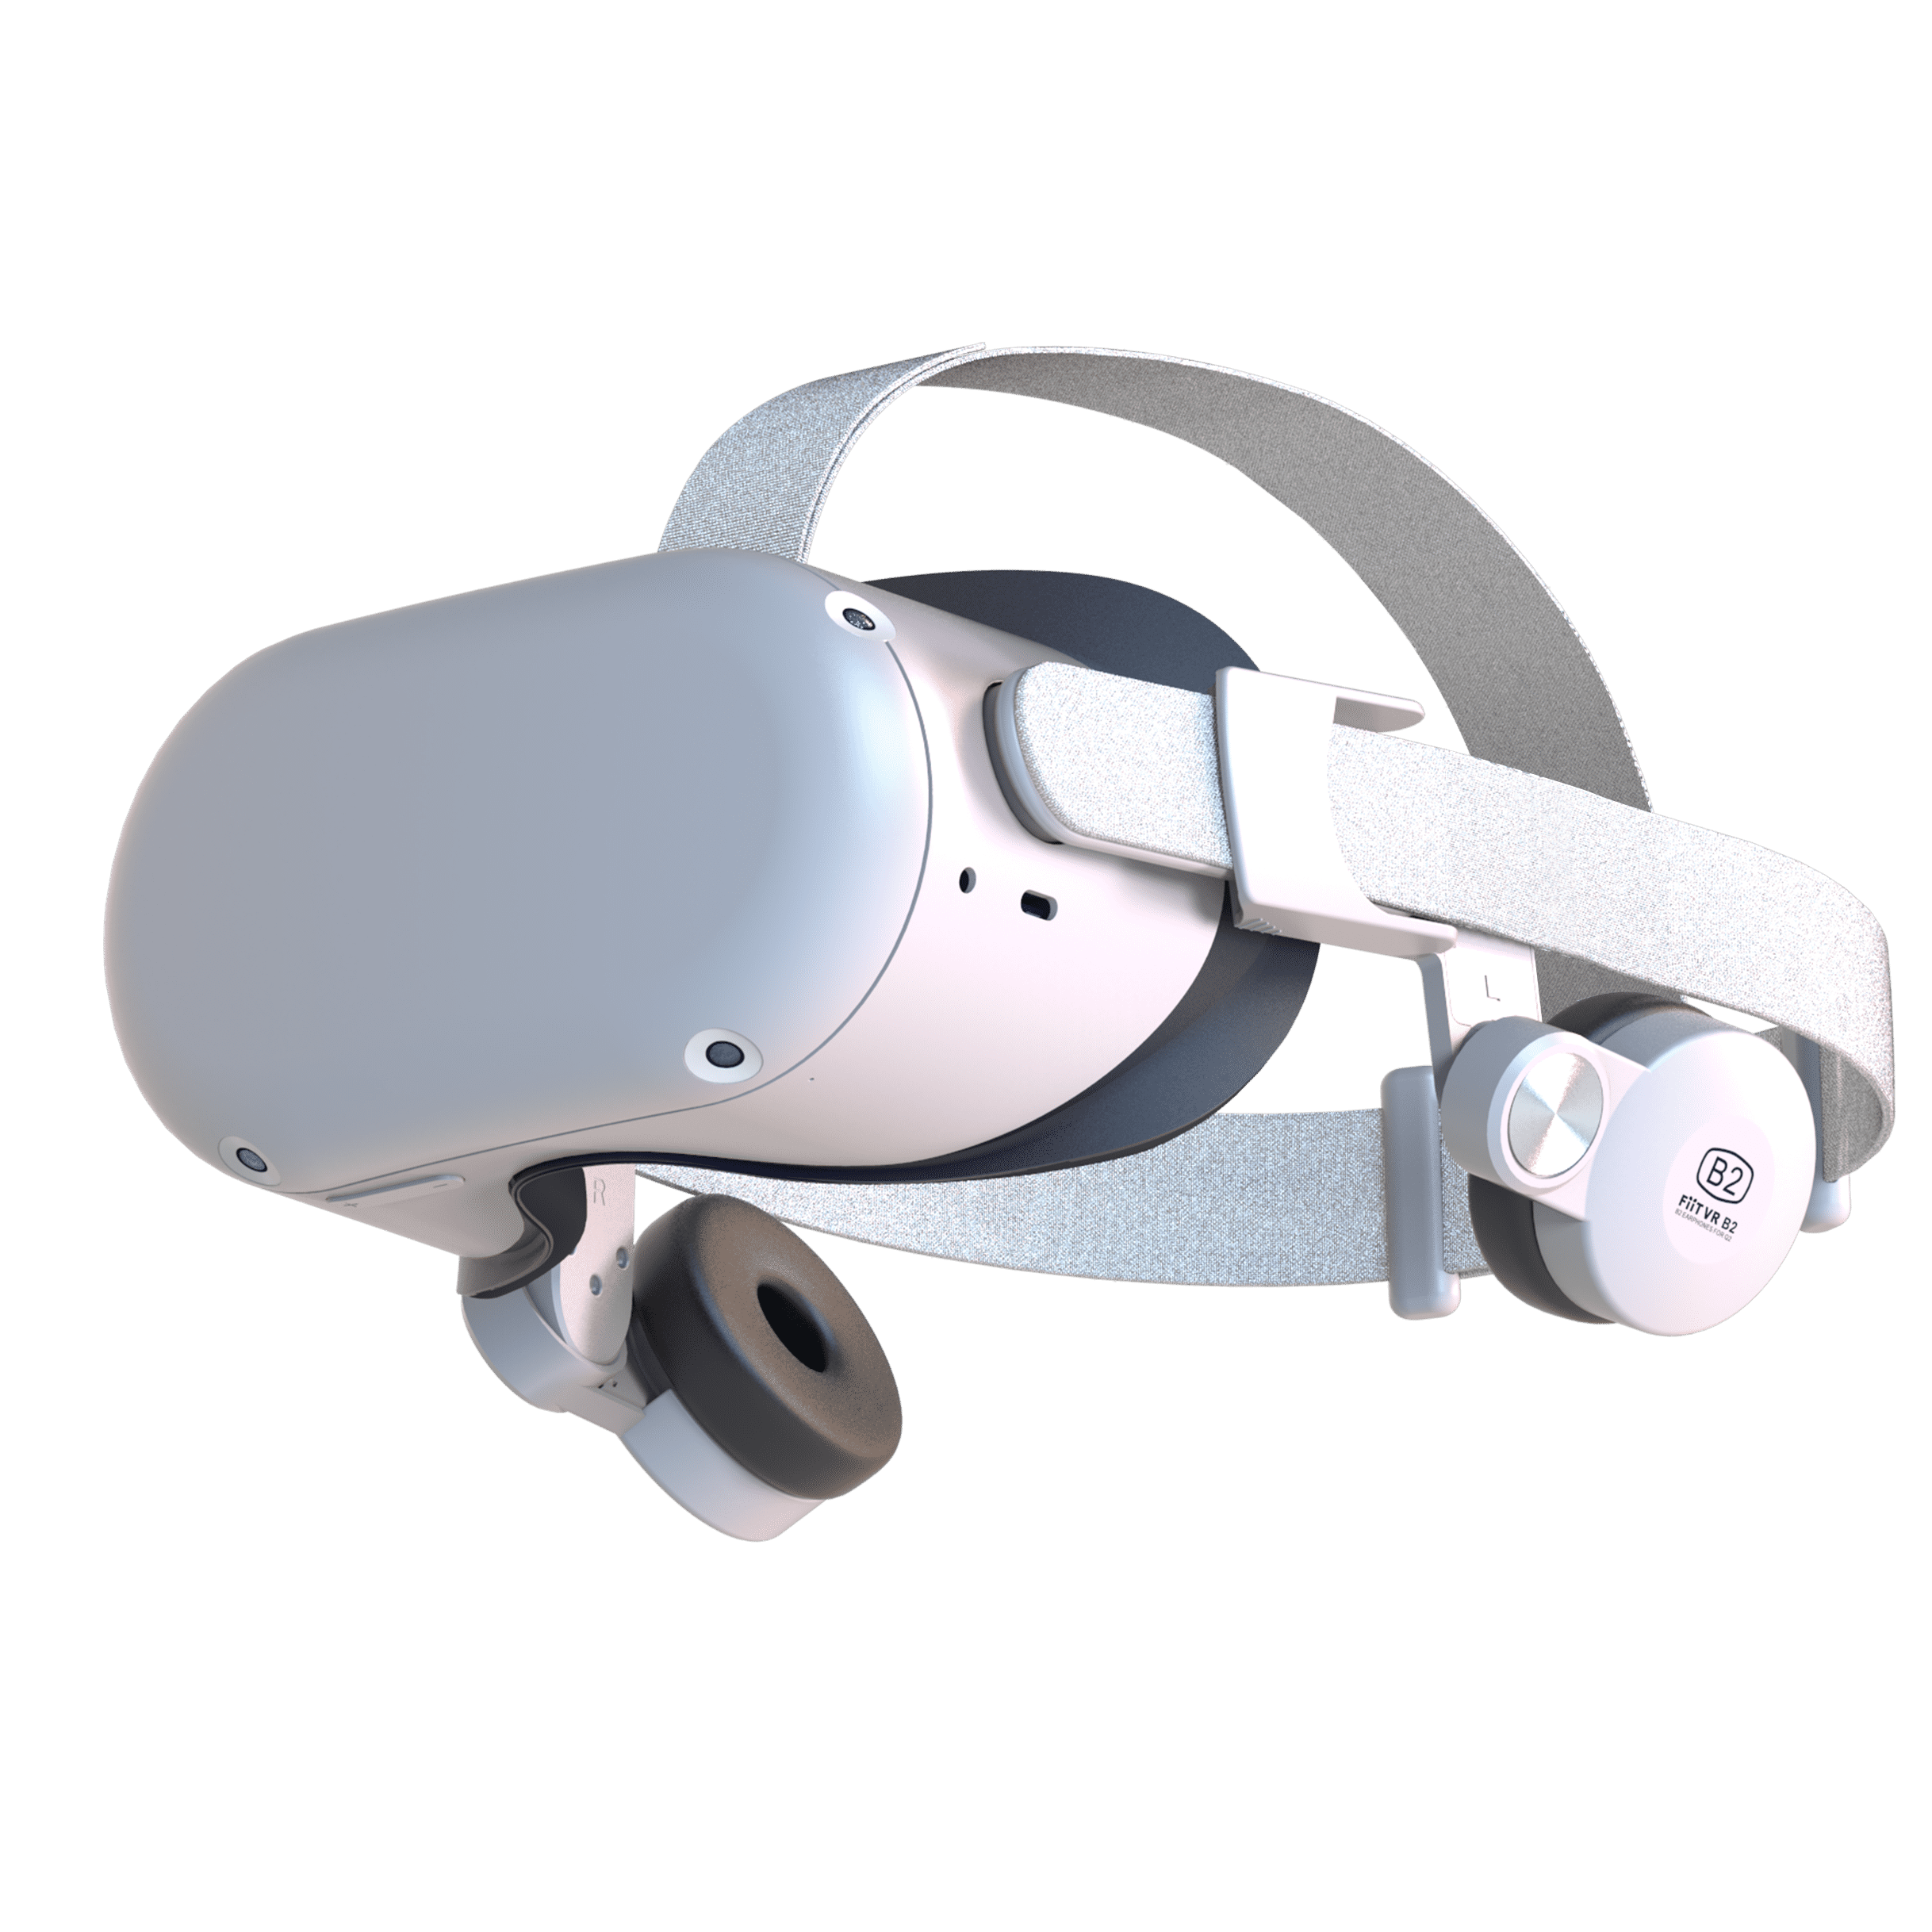 Meta/Oculus Quest 2 Accessories Hibloks Adjustable Ear Muffs for Meat/Oculus Quest 2 Enhance Sound Effect Compatible with Original Strap/Elite Strap/KIWI Strap/BOBOVR Strap .etc 